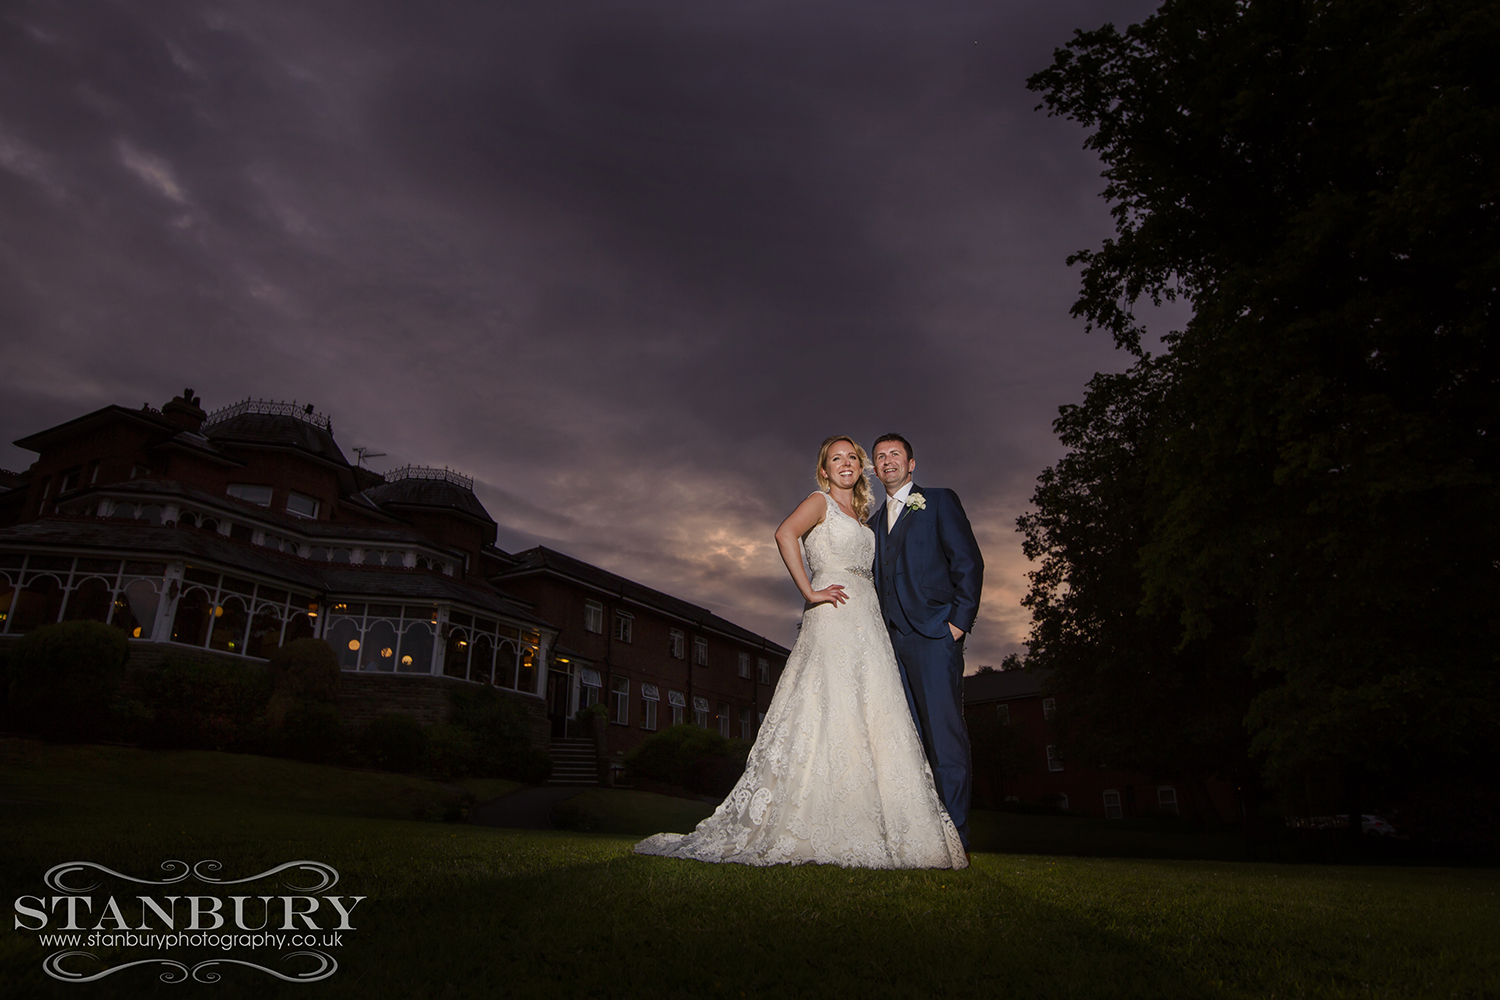 kilhey court wedding photographers - stanbury photography wigan